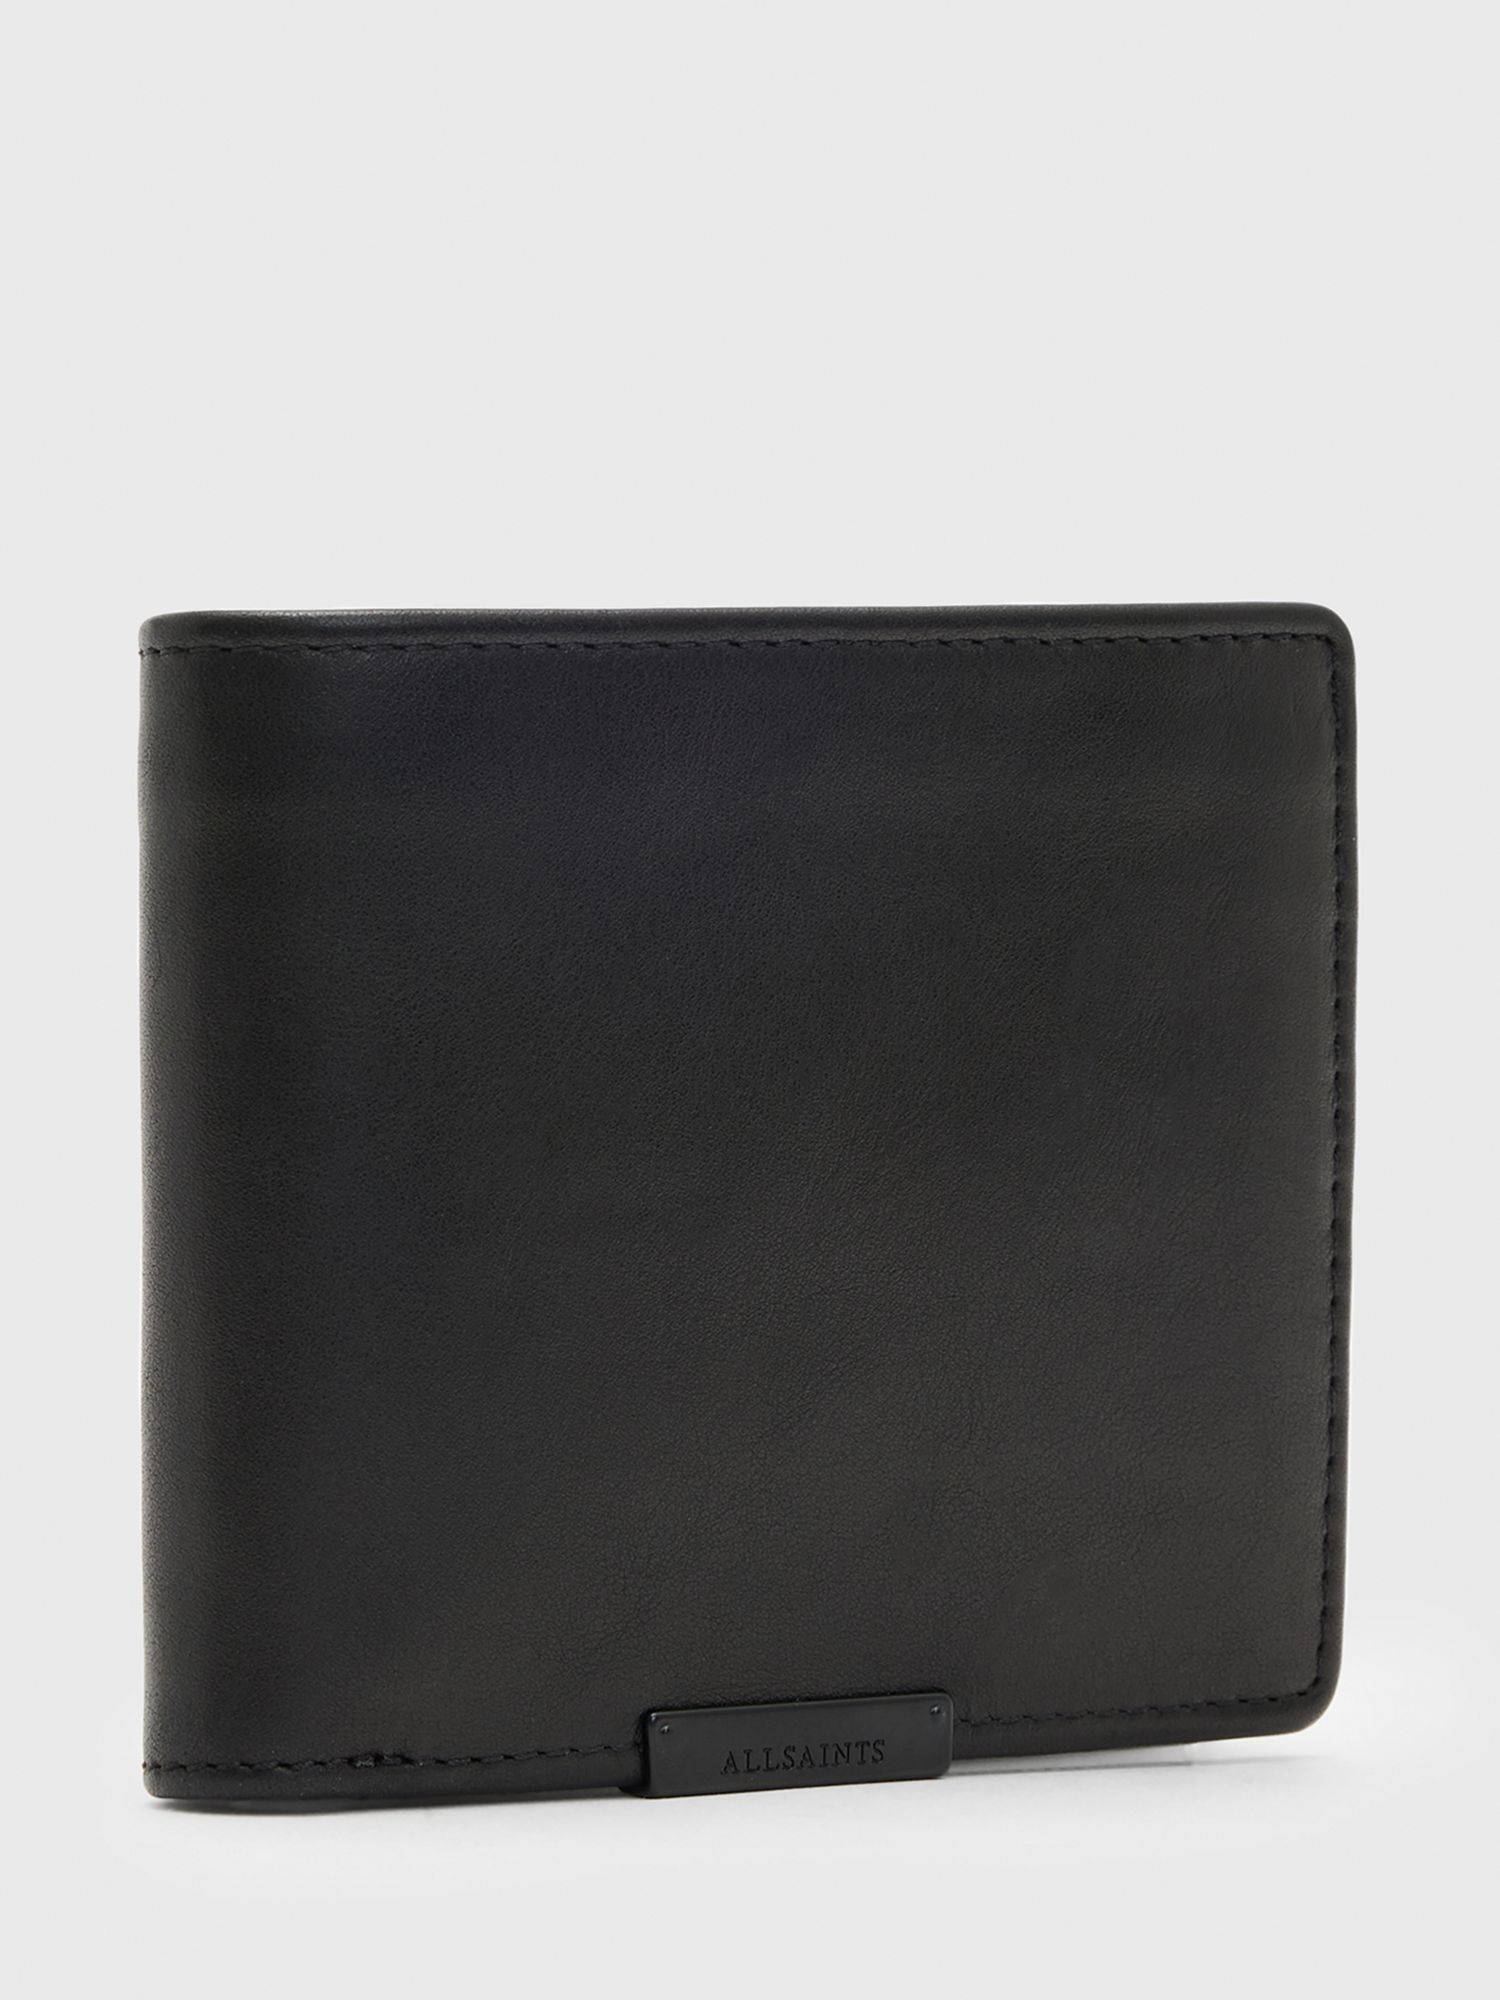 AllSaints Blyth Wallet, Black at John Lewis & Partners